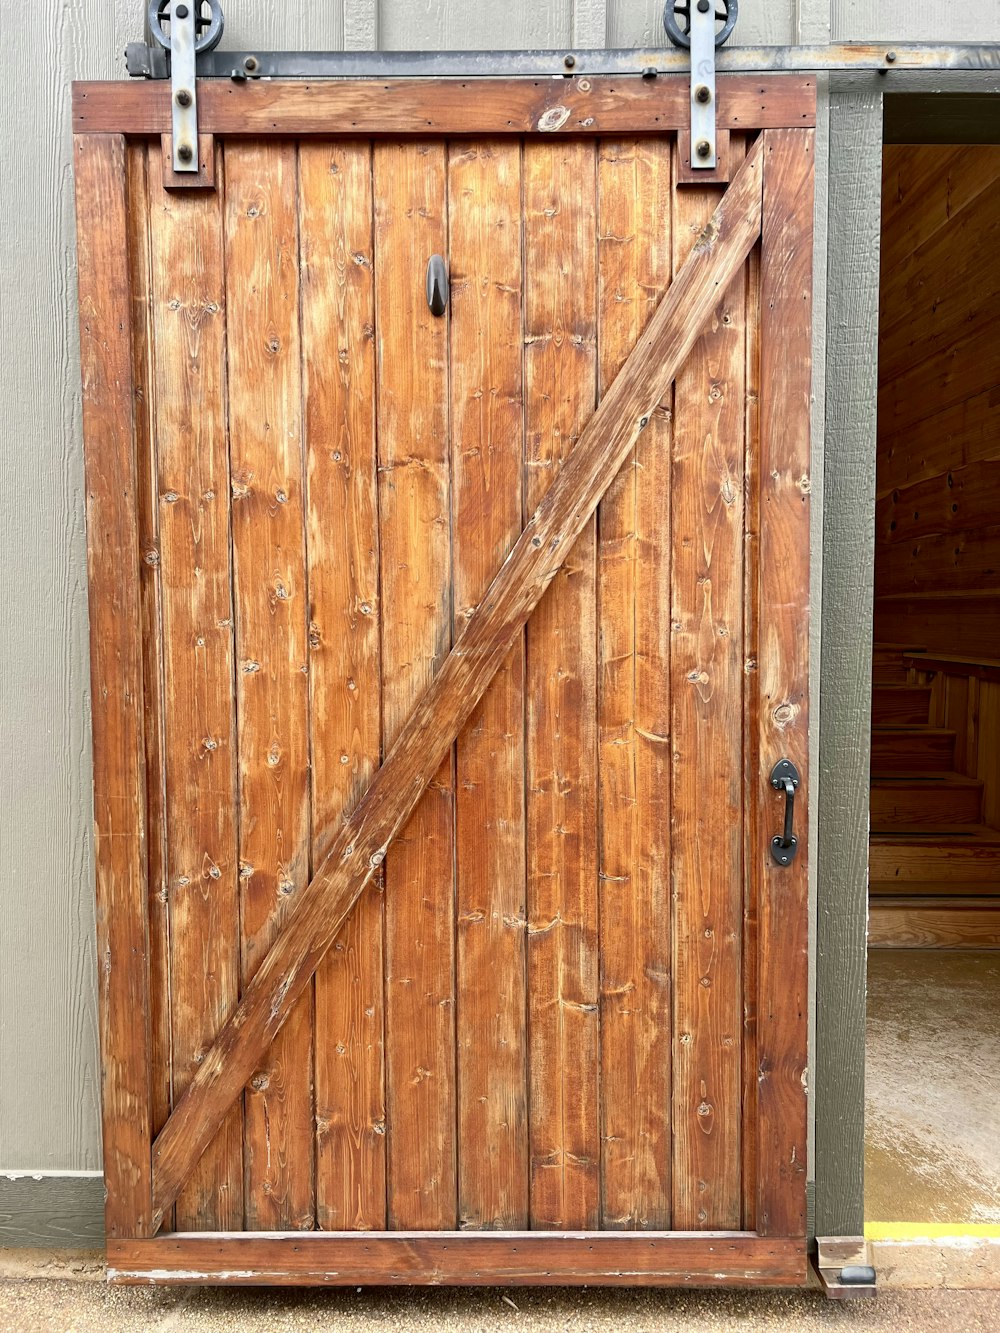 a wooden door with a handle